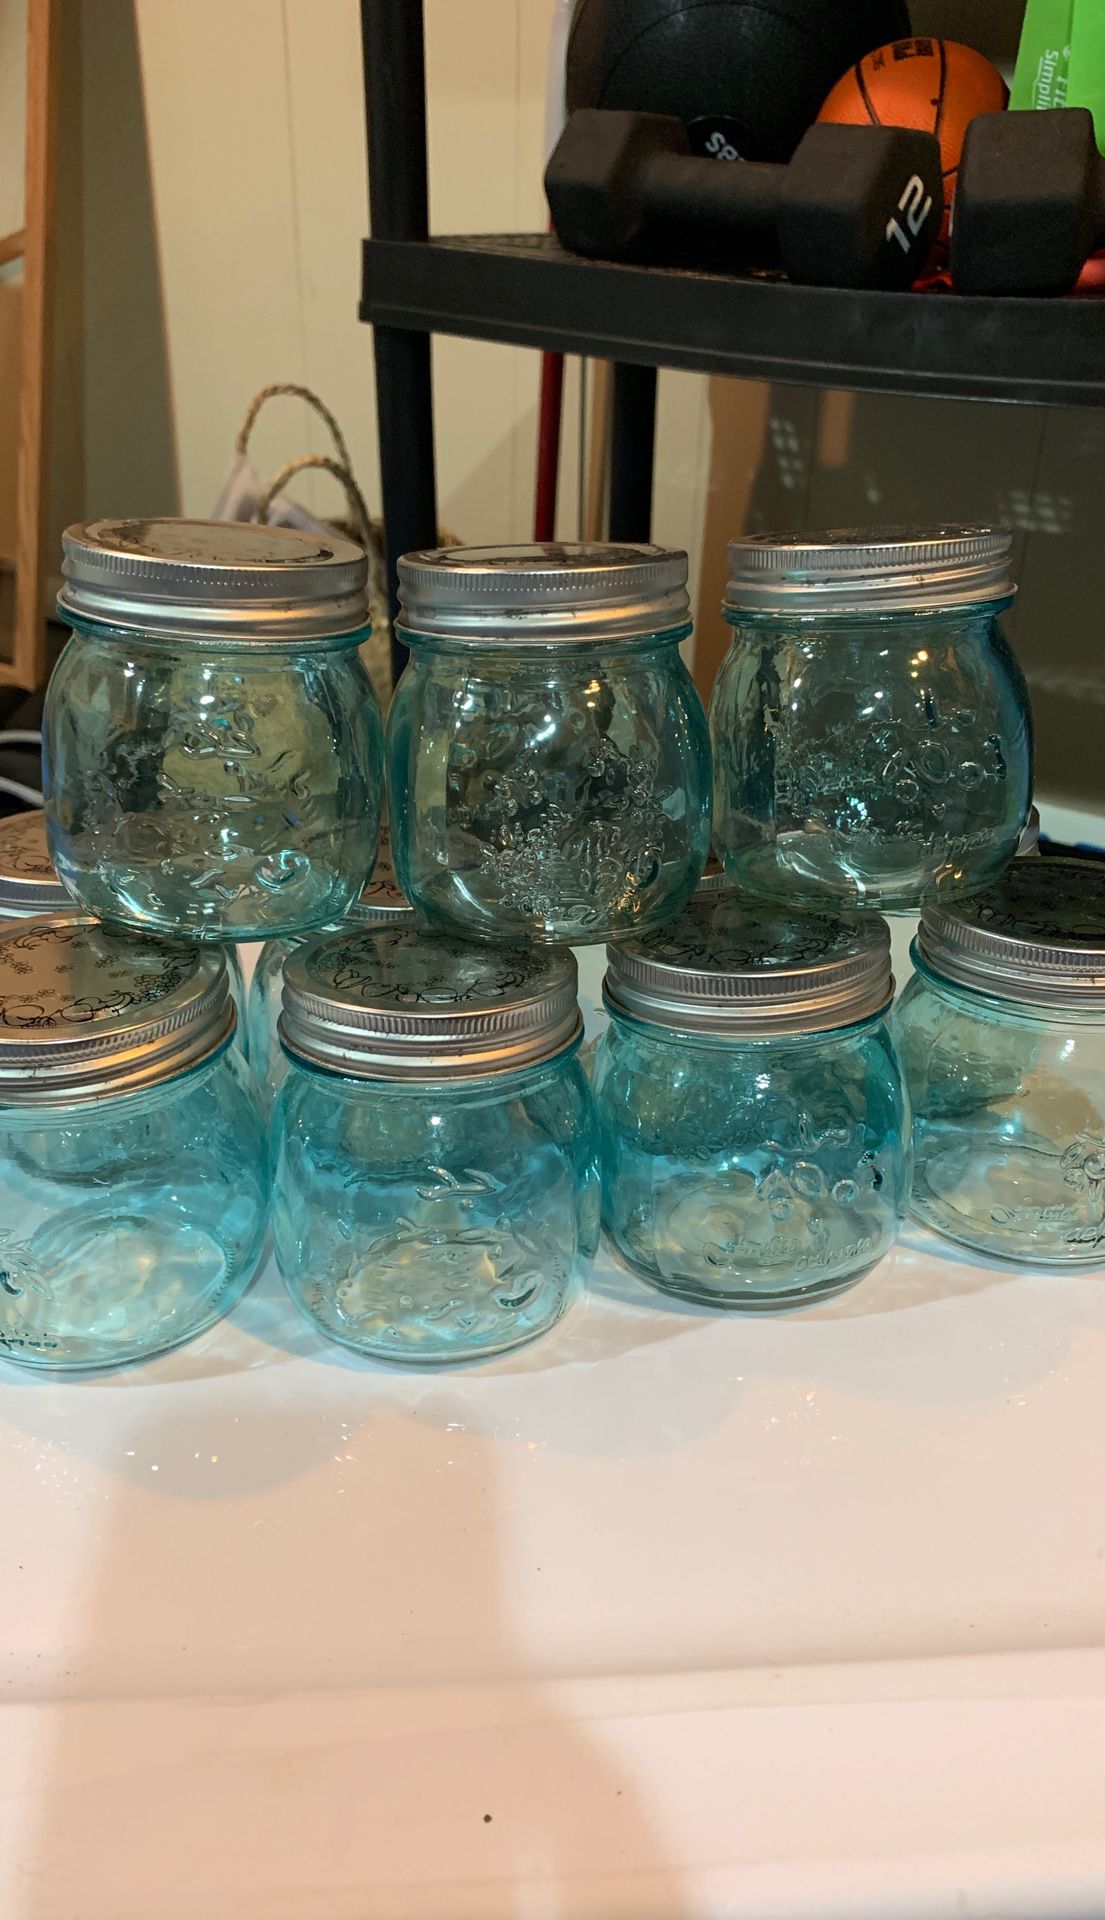 (20) small blue jars - Bridal shower? Baby shower??